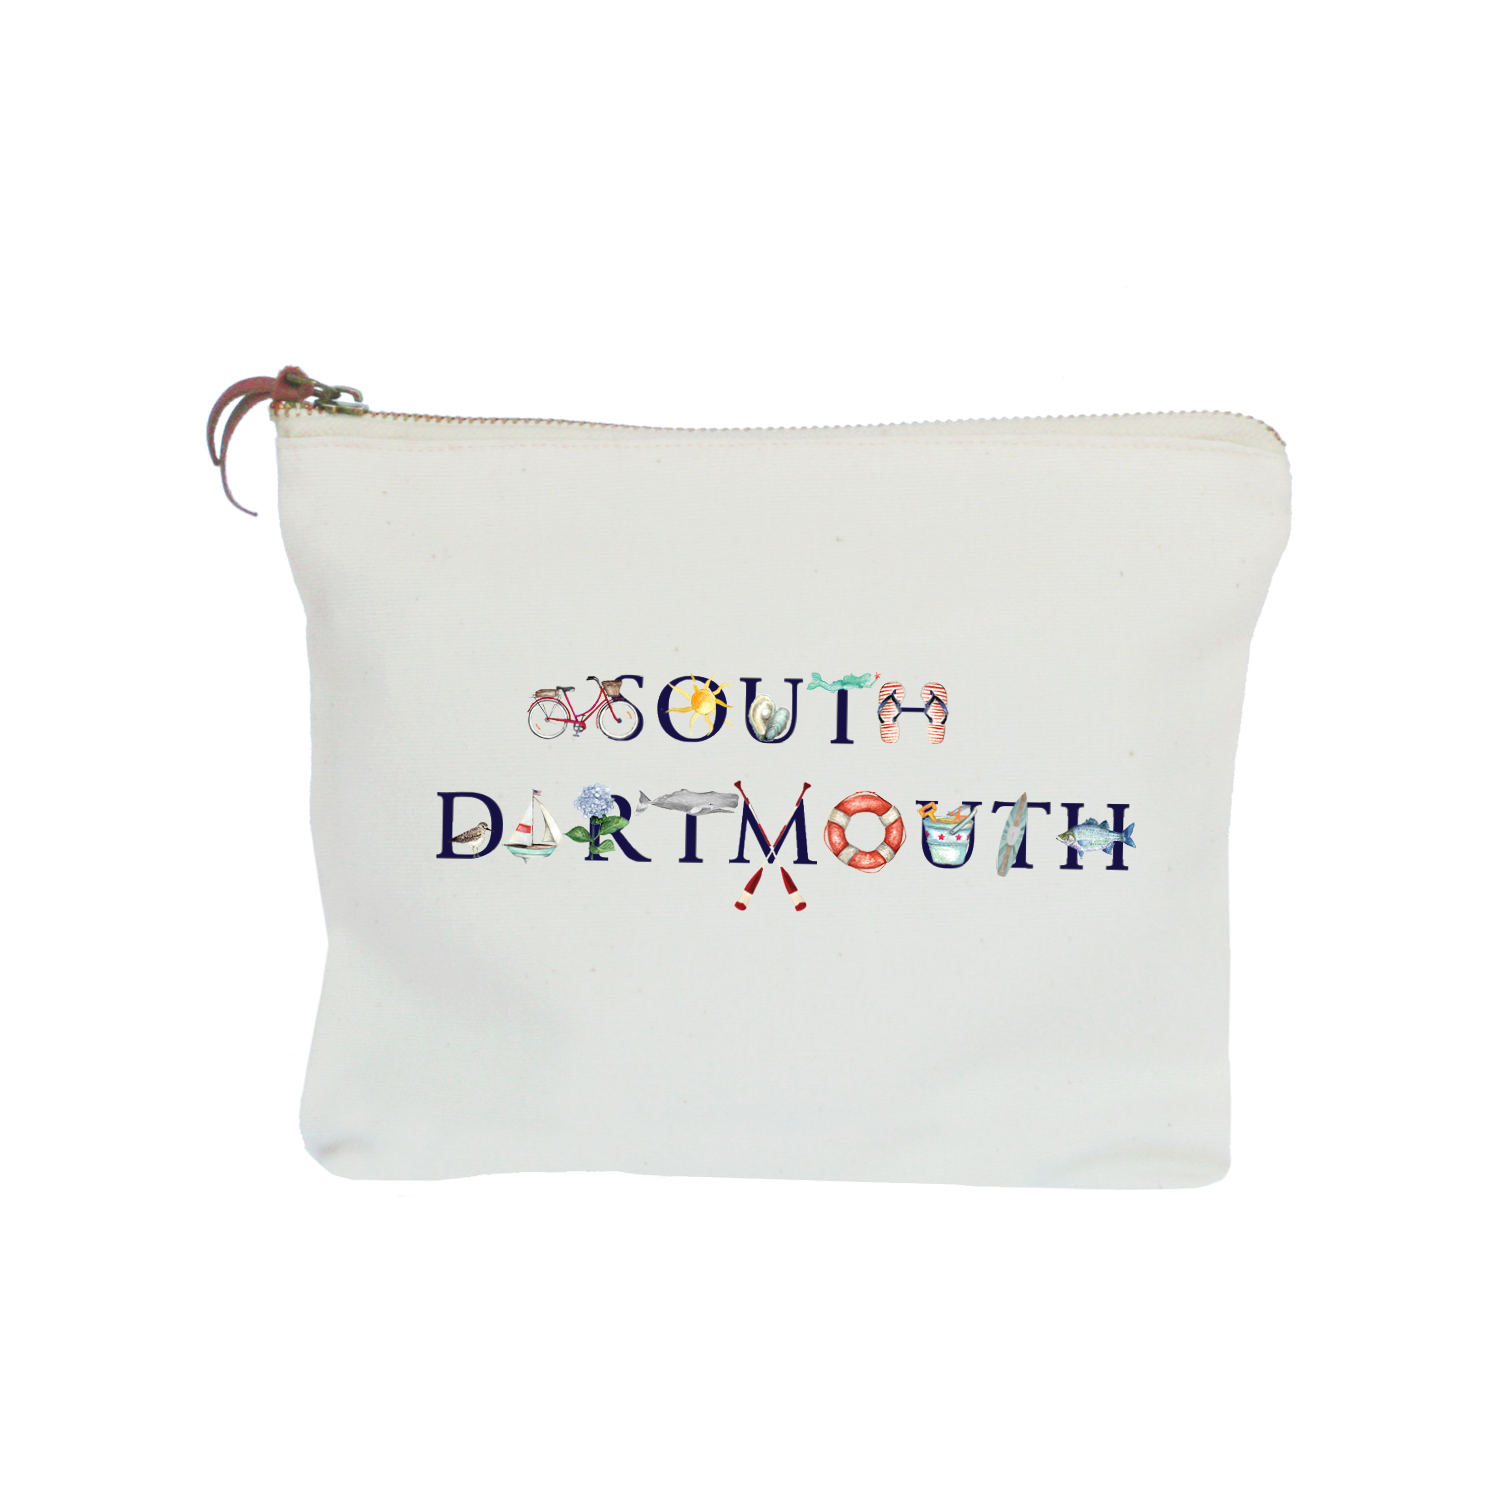 south dartmouth zipper pouch